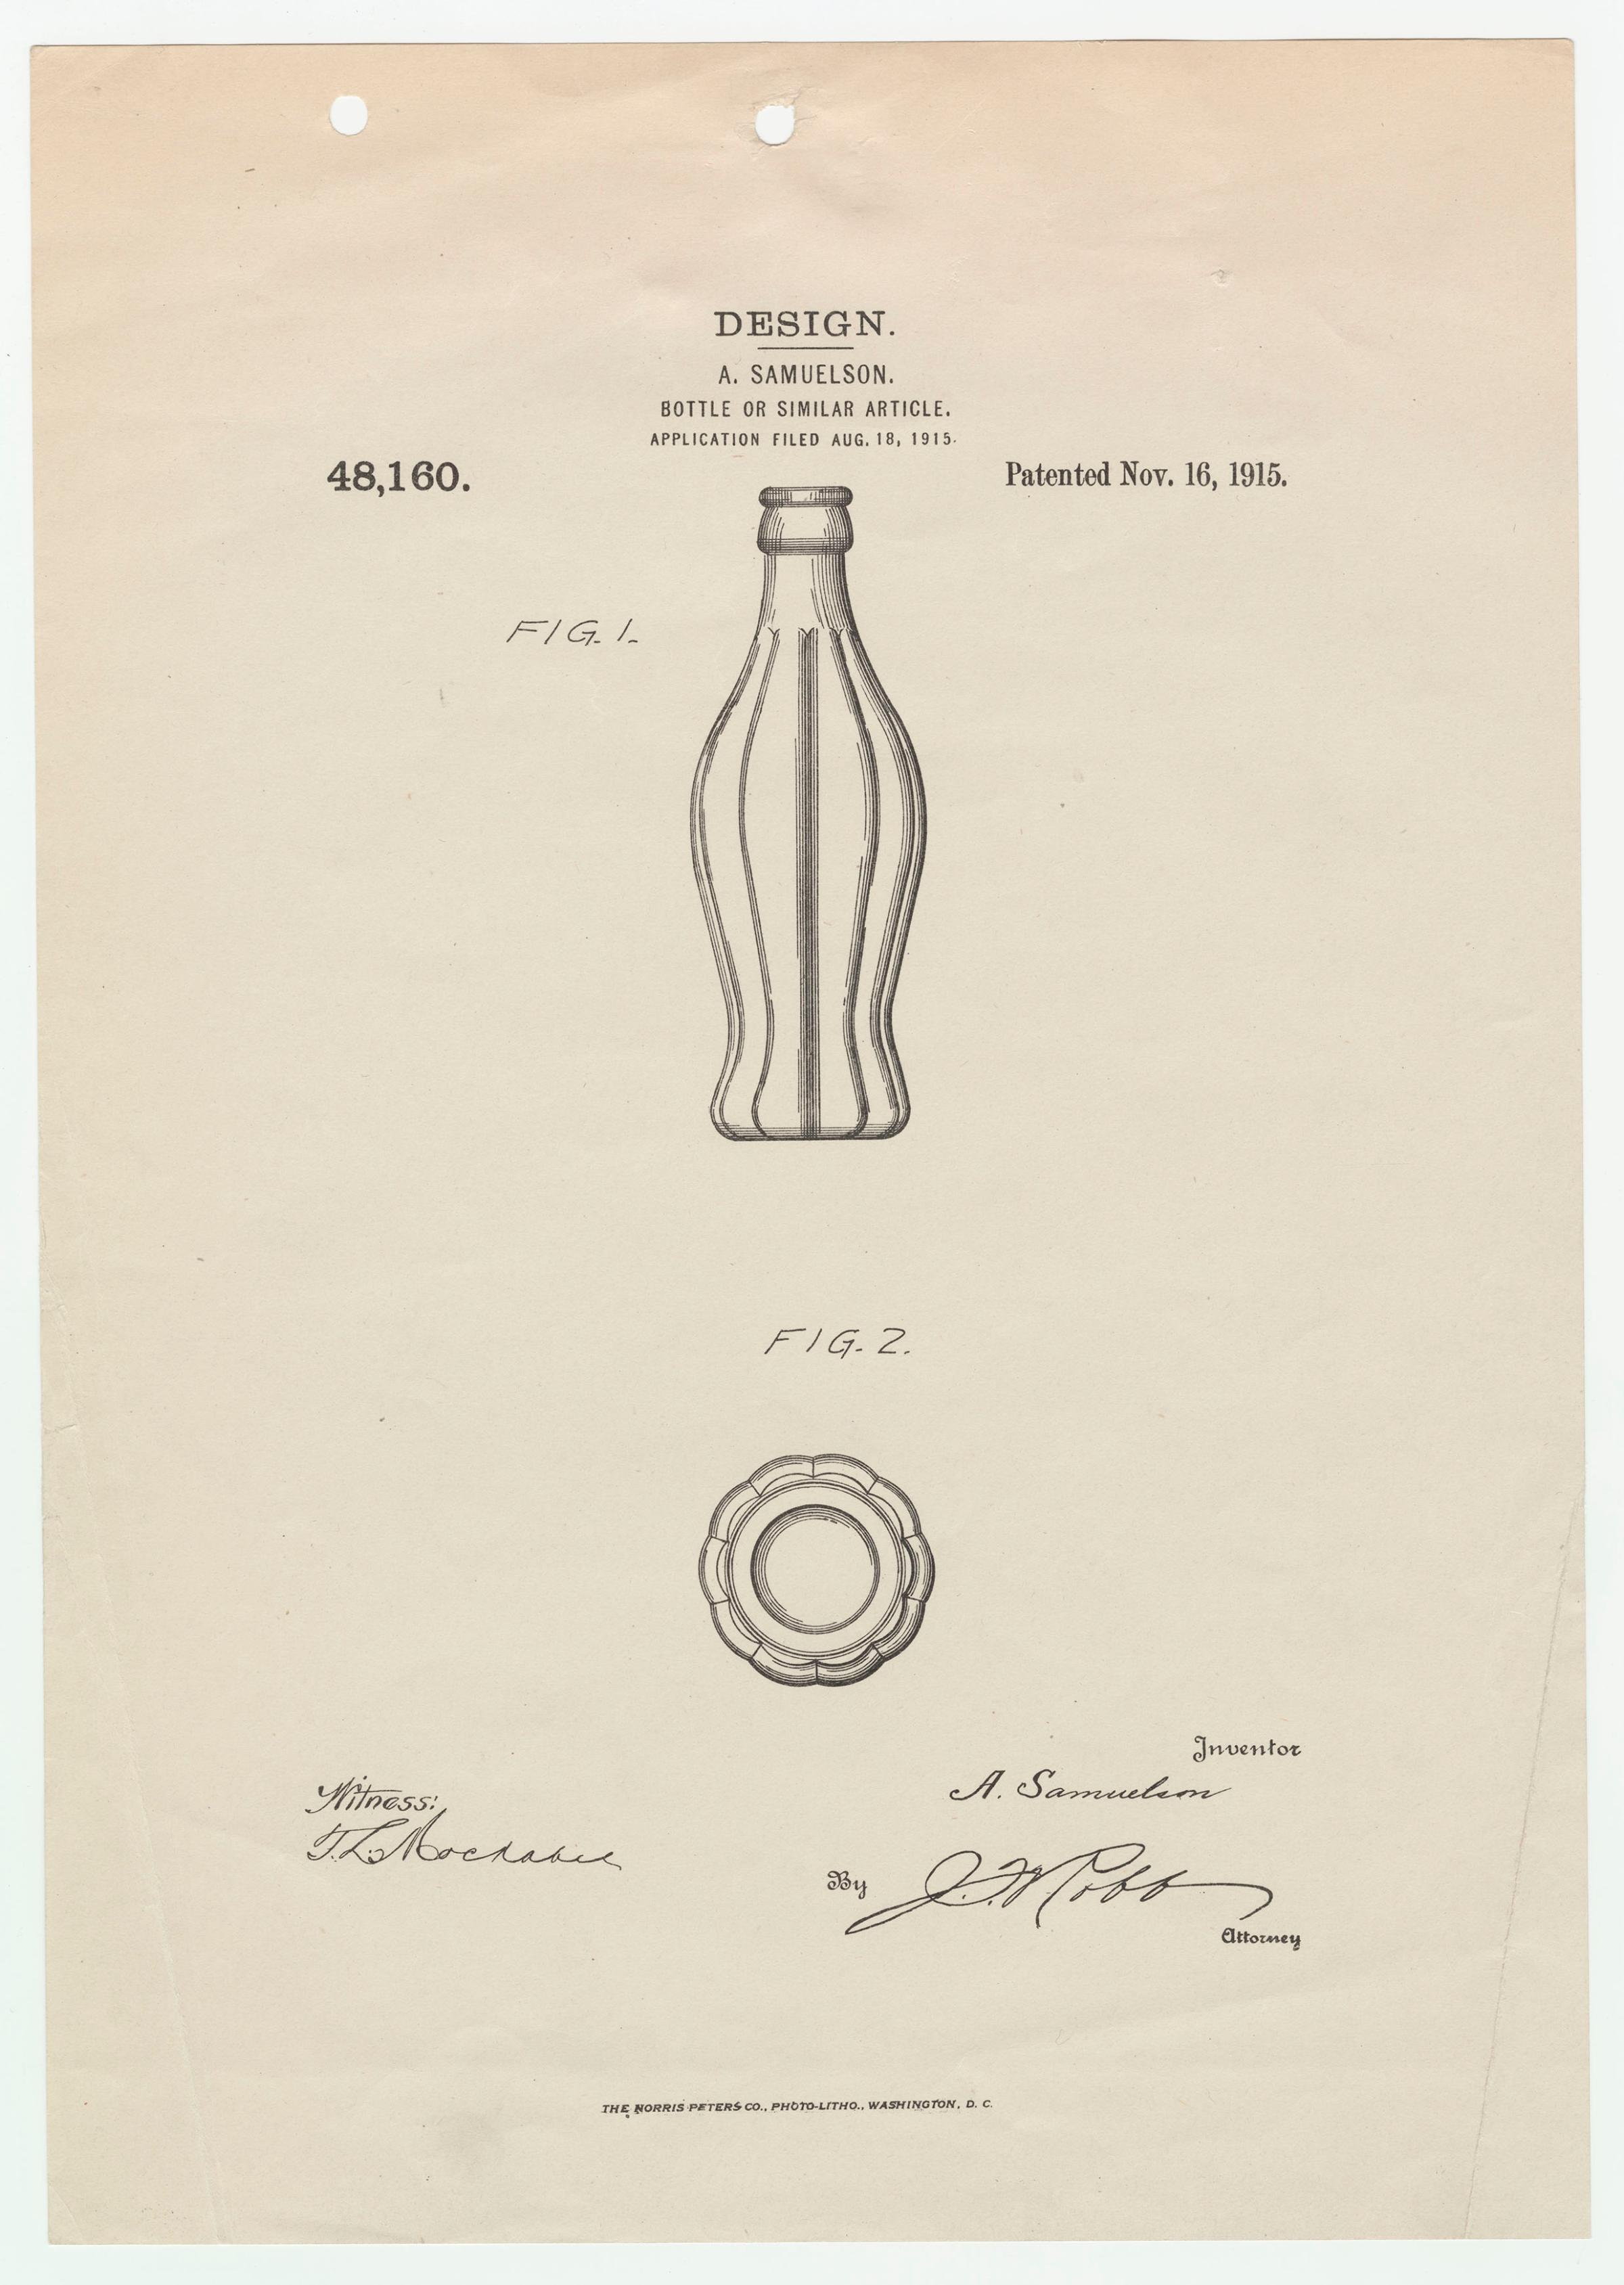 Coca-Cola bottle patent, 1915